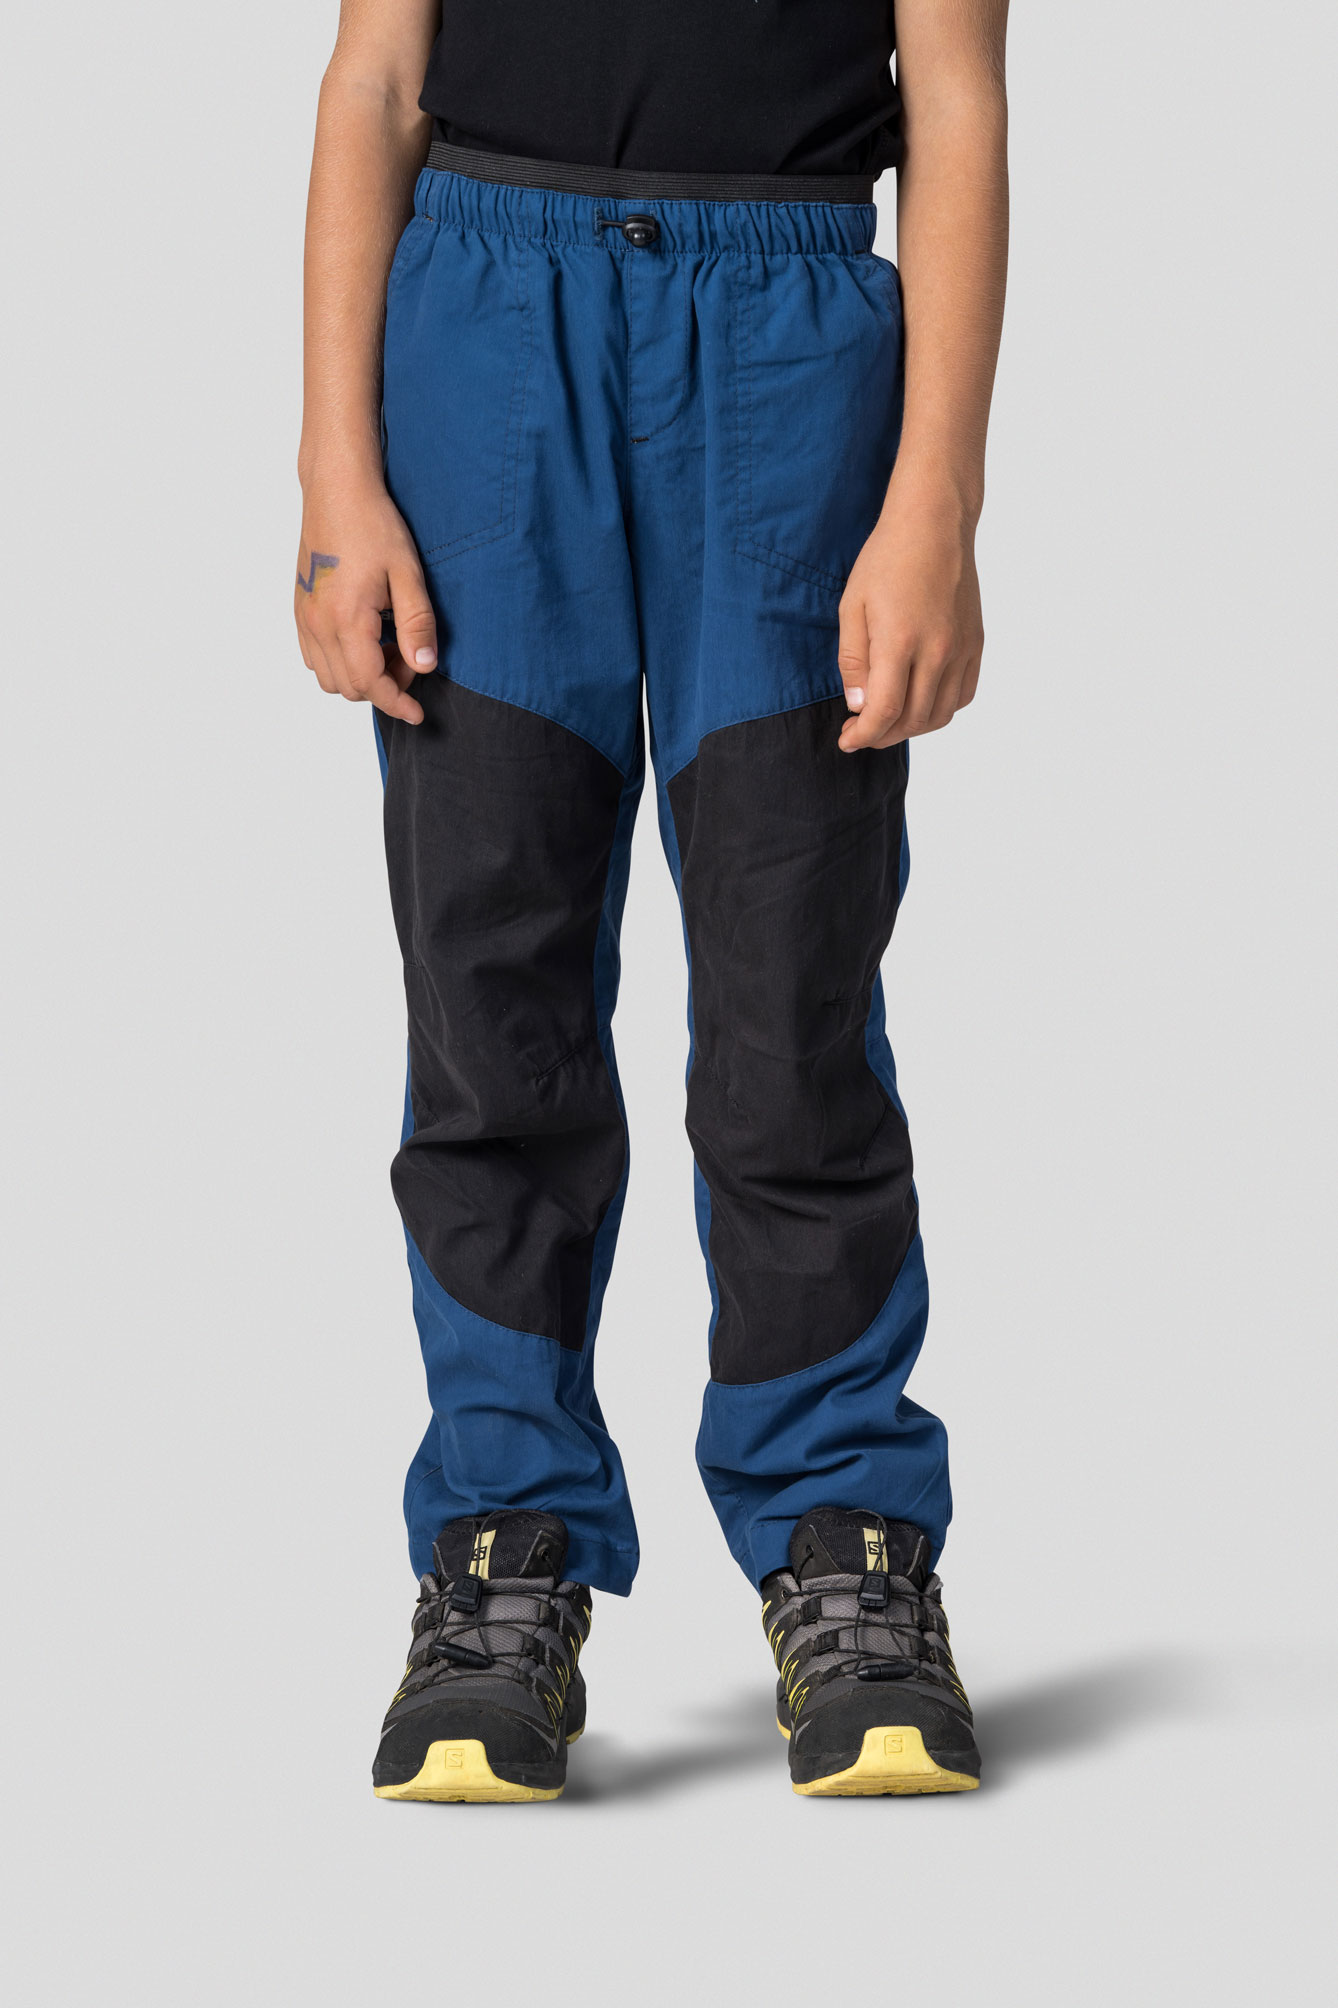 Children's outdoor trousers